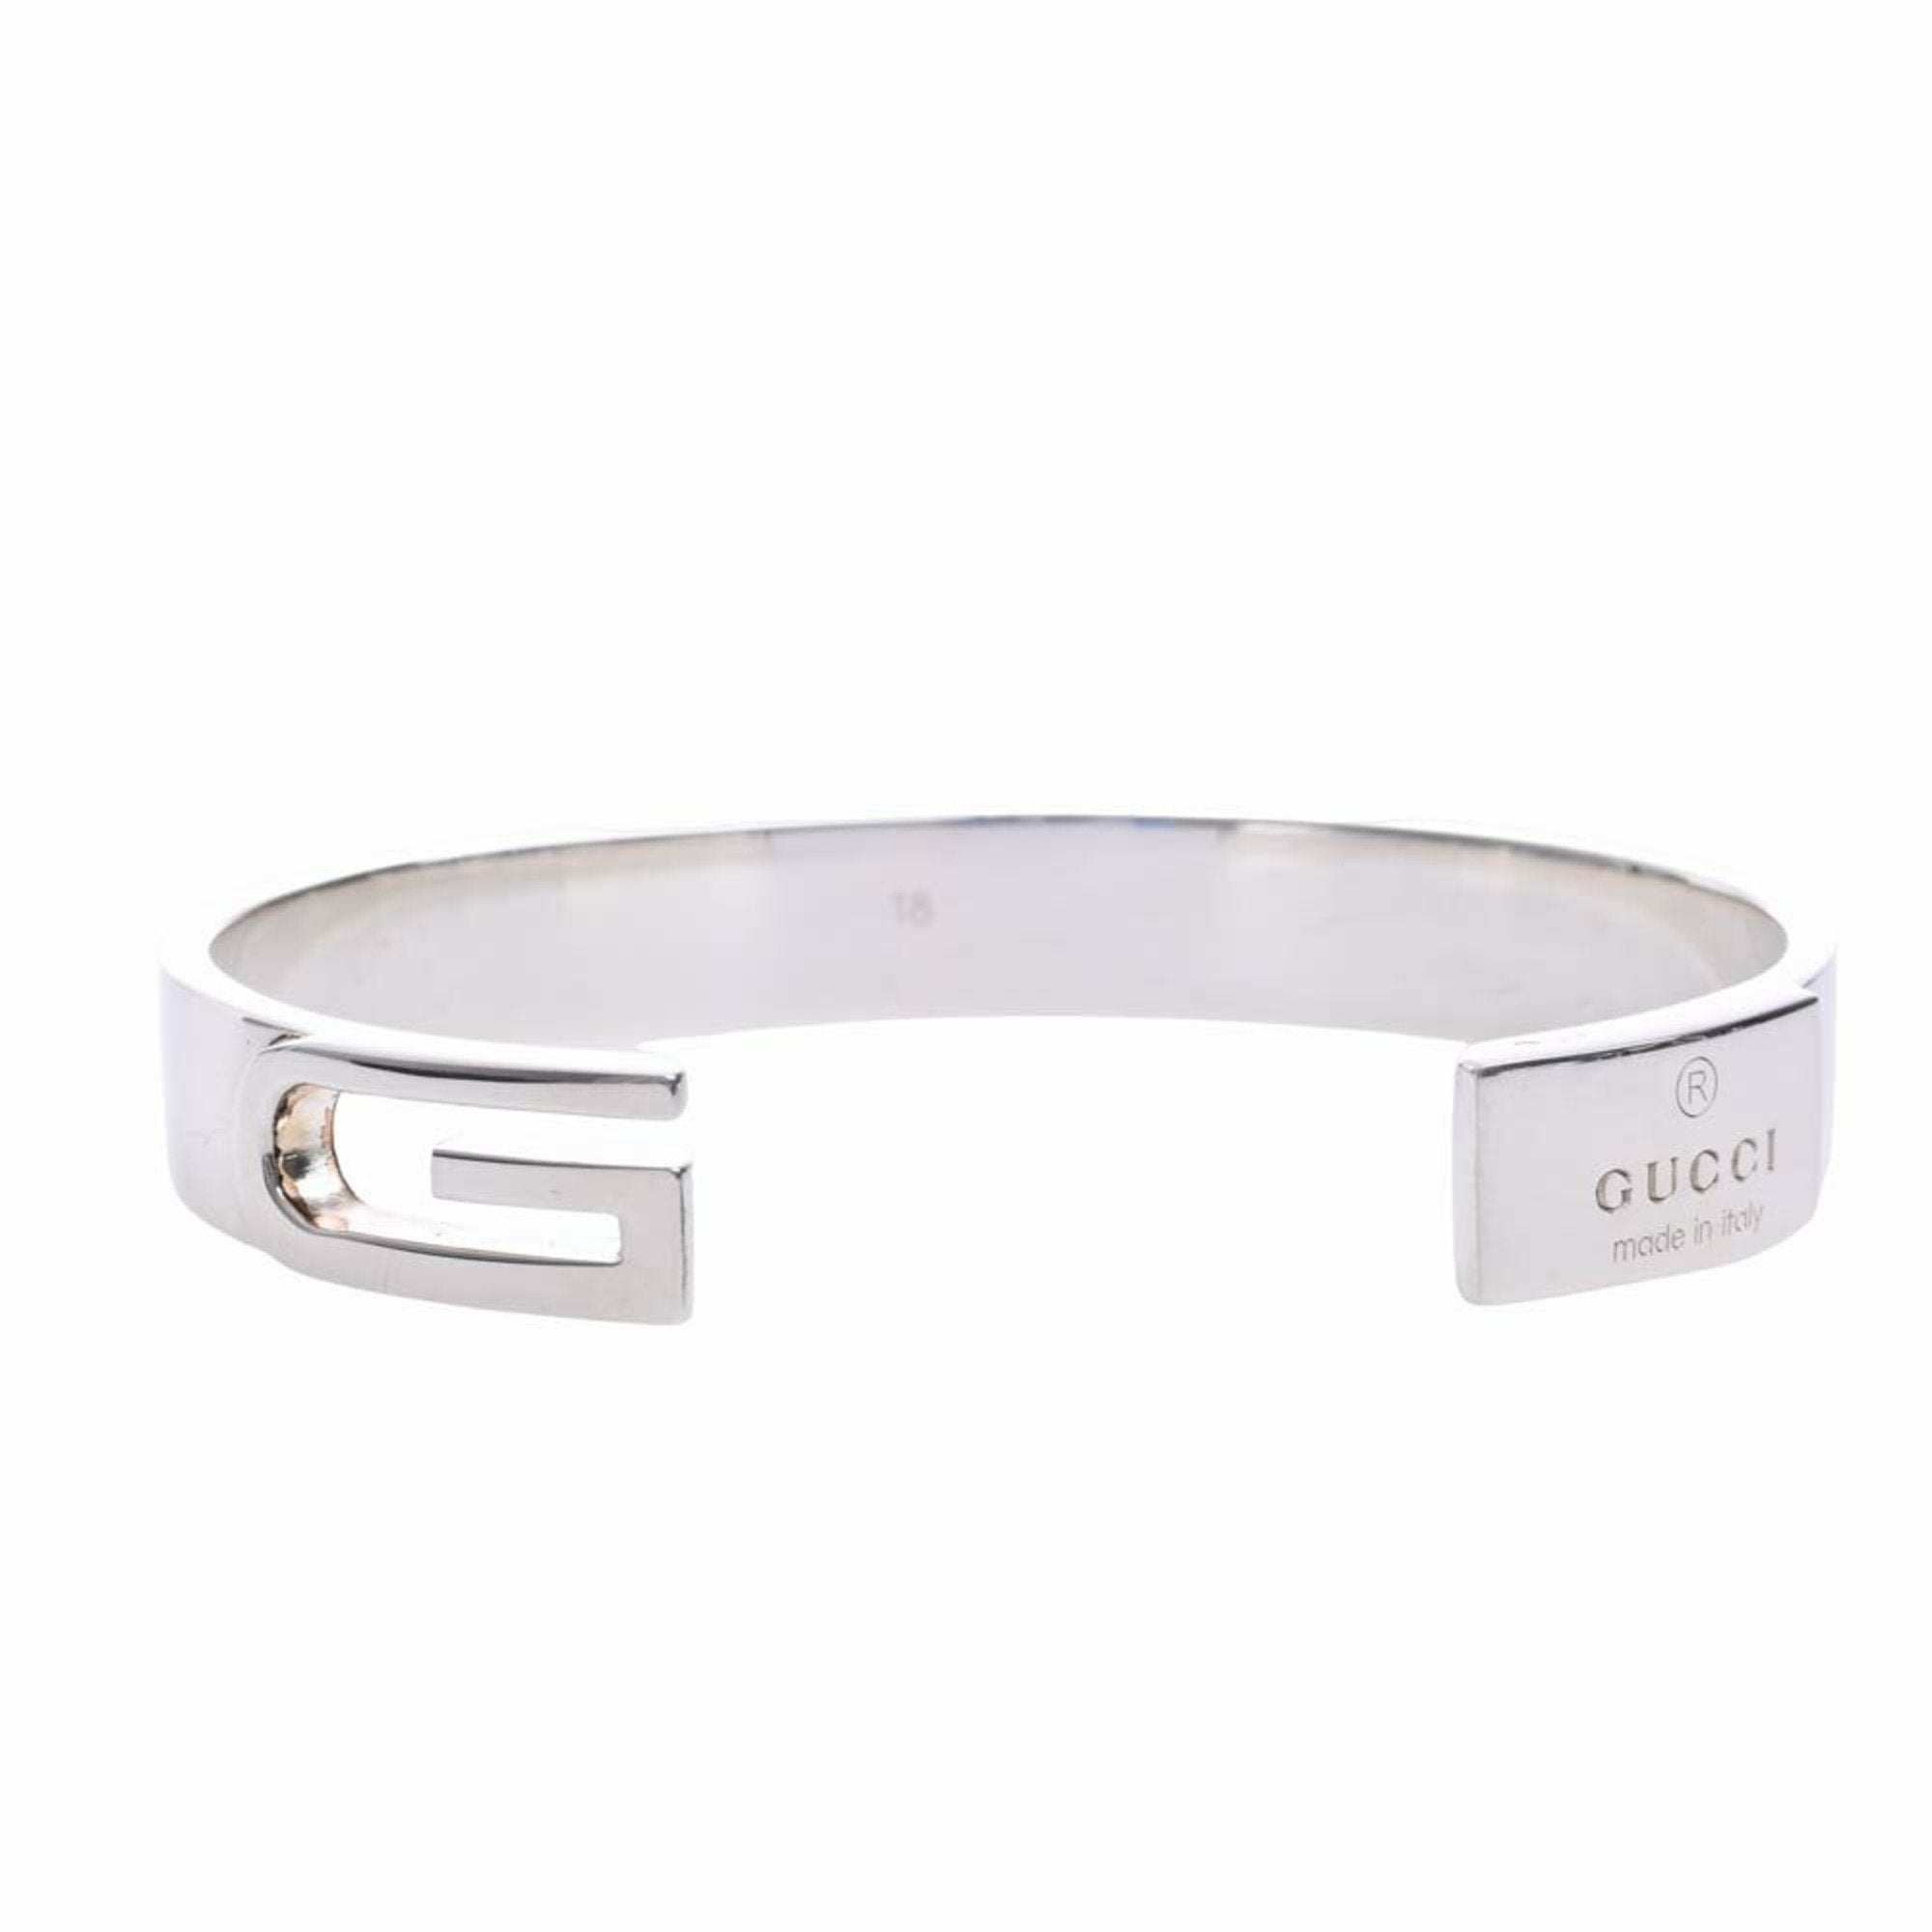 Gucci GUCCI interlocking G bracelet silver 295711 J8400 8106 sterling silver  GG new article